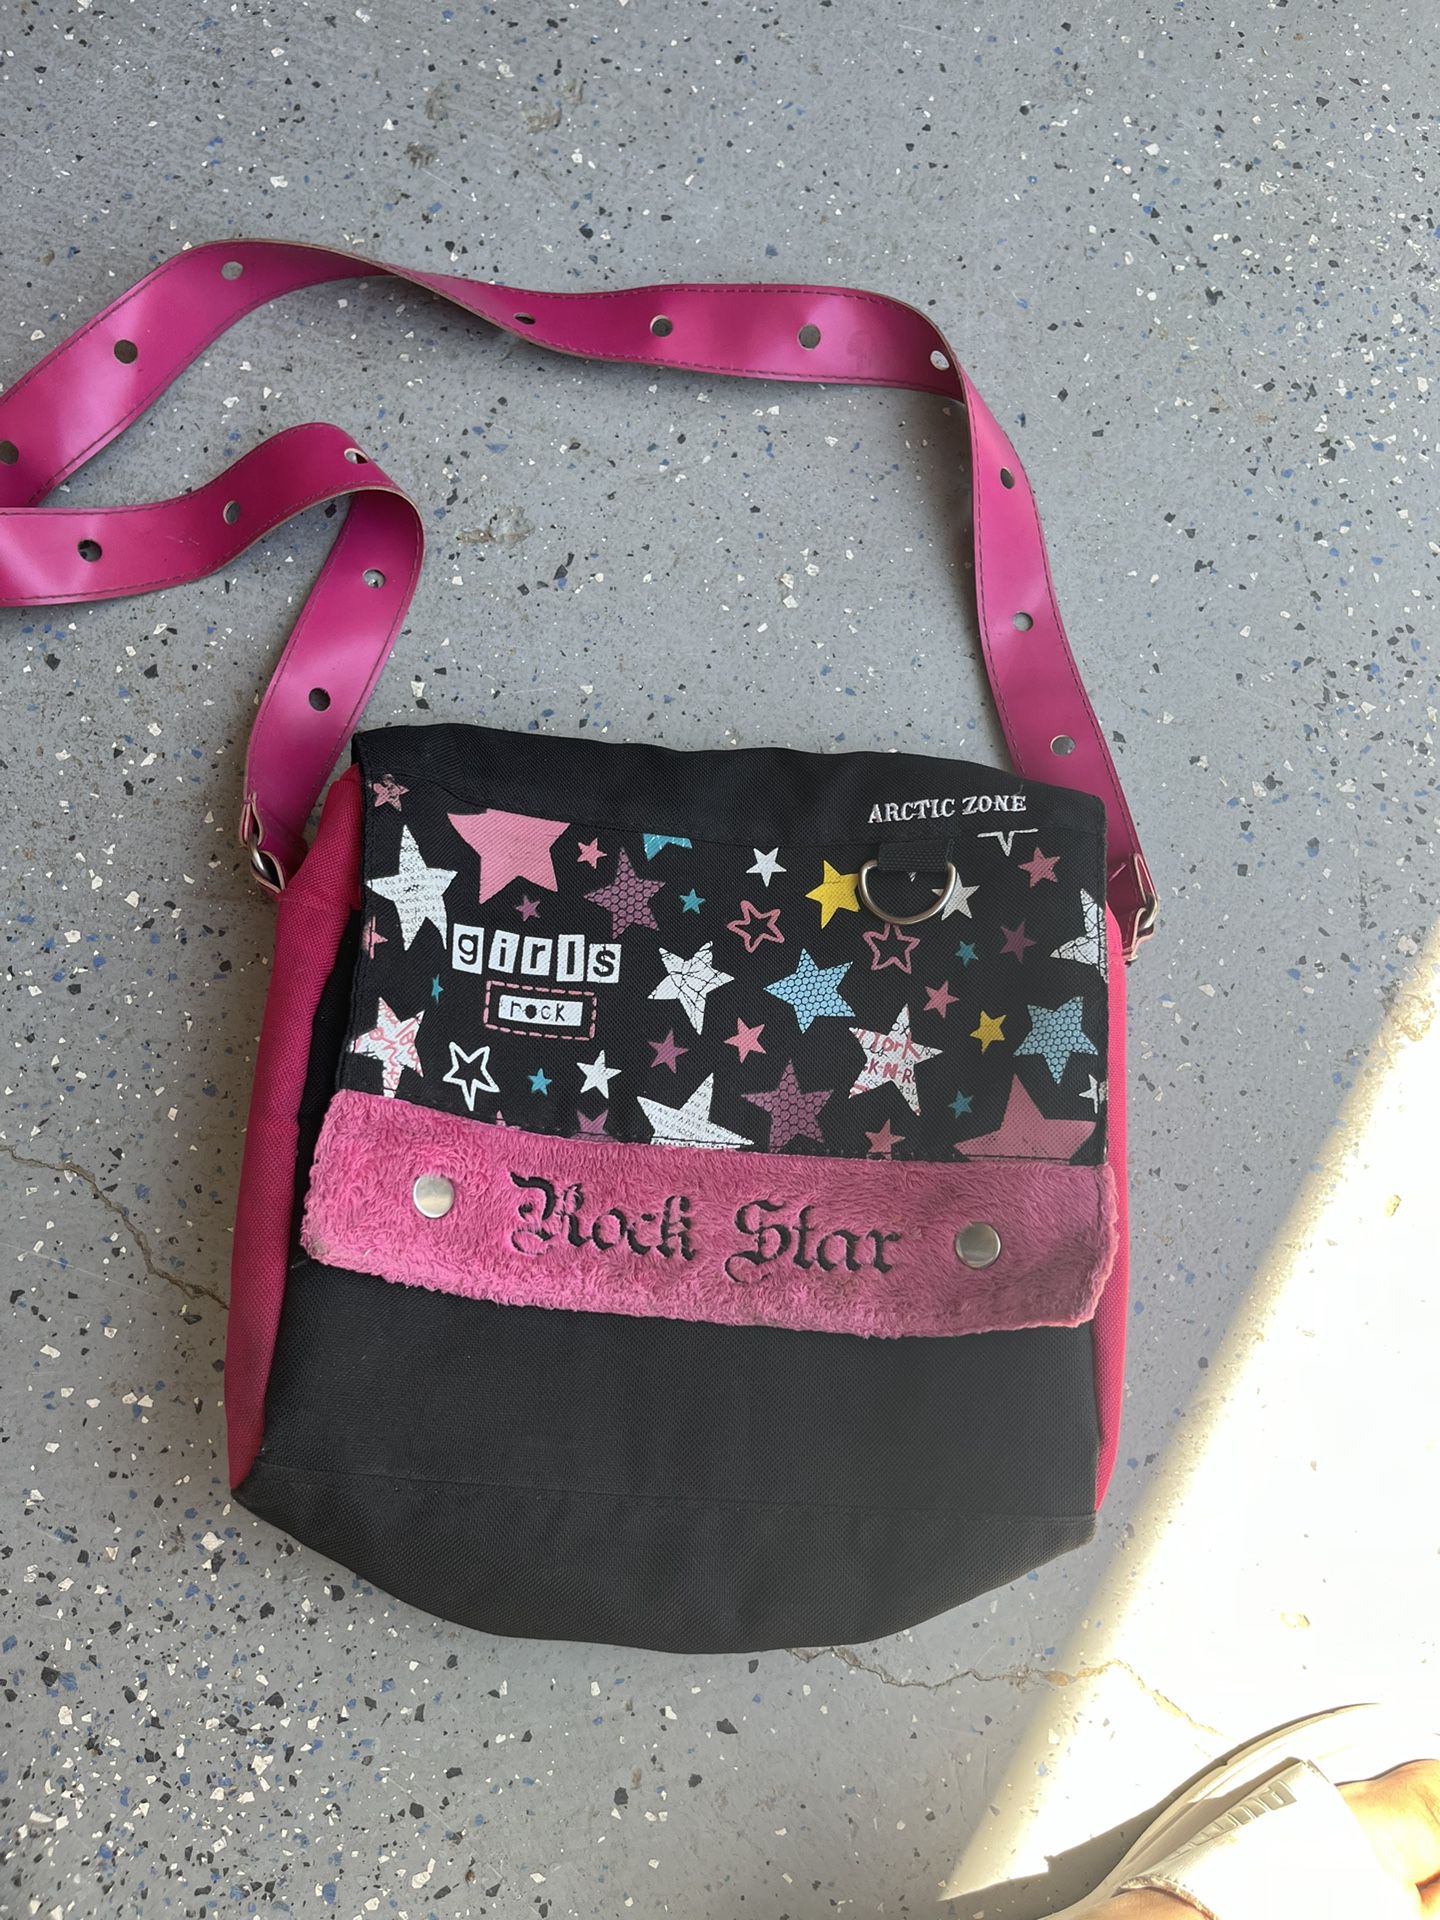 Satchel Style Bag - $8